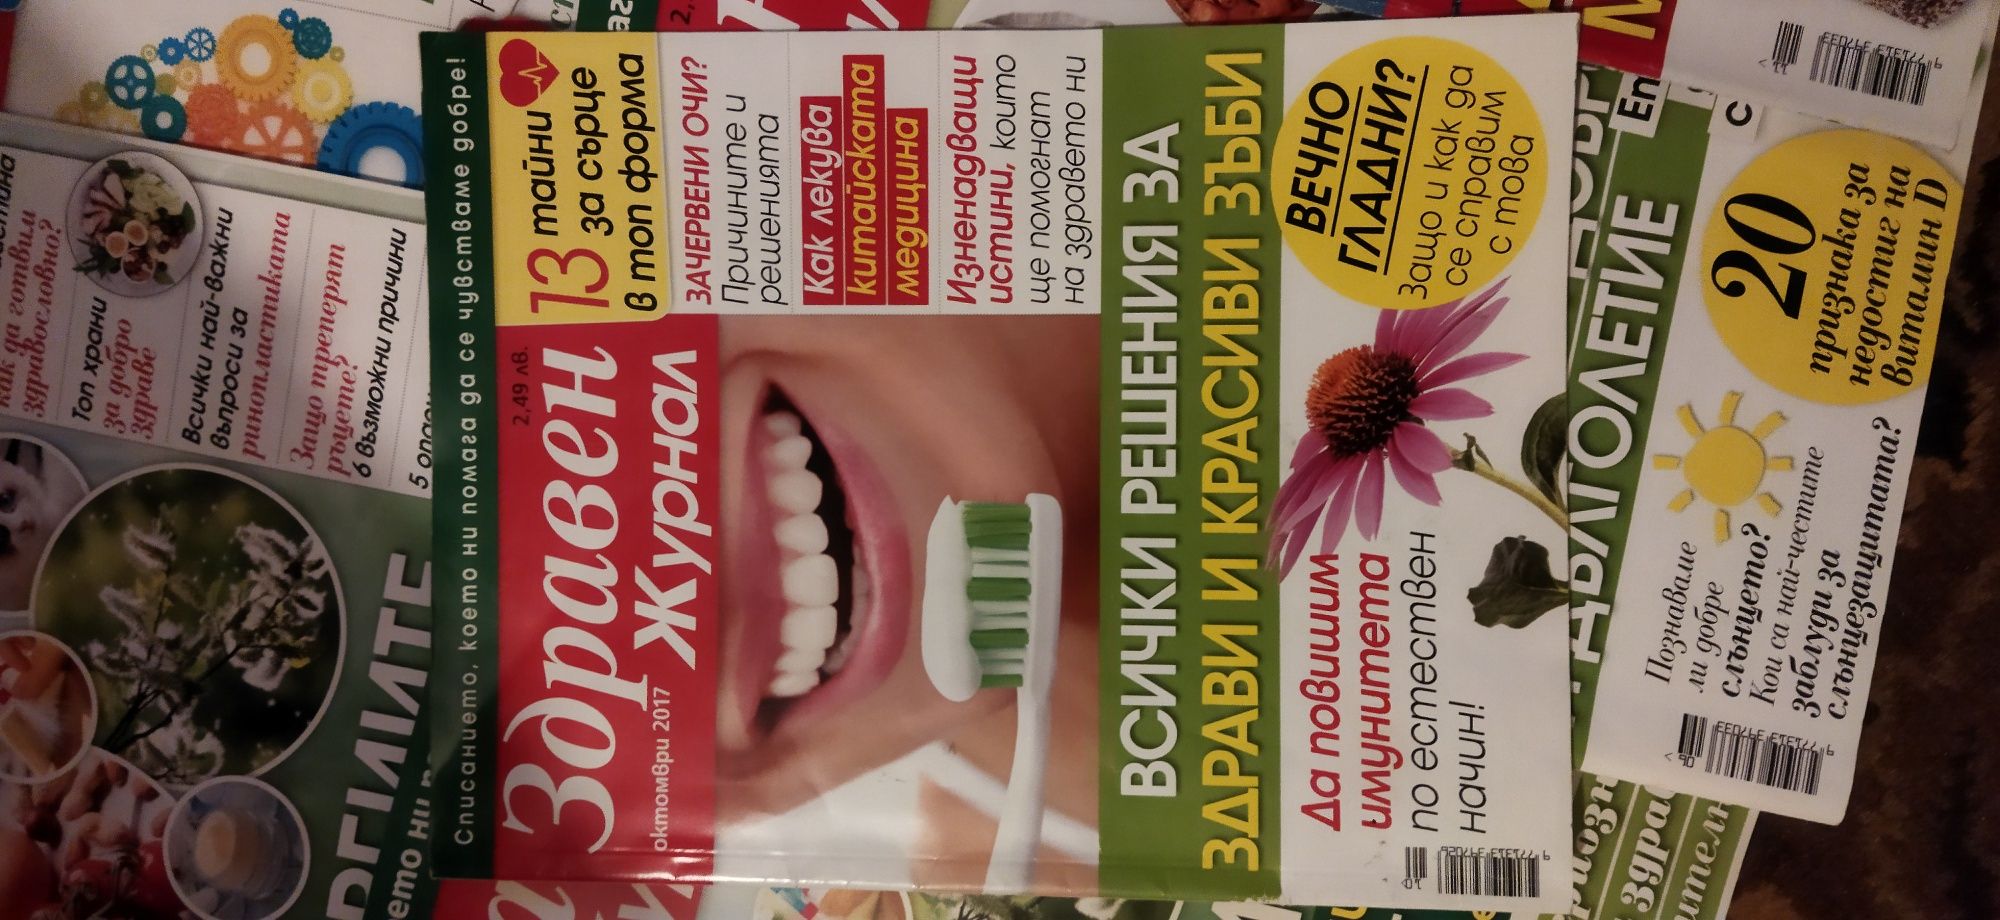 12 броя здравен журнал и 14 броя журнал за жената